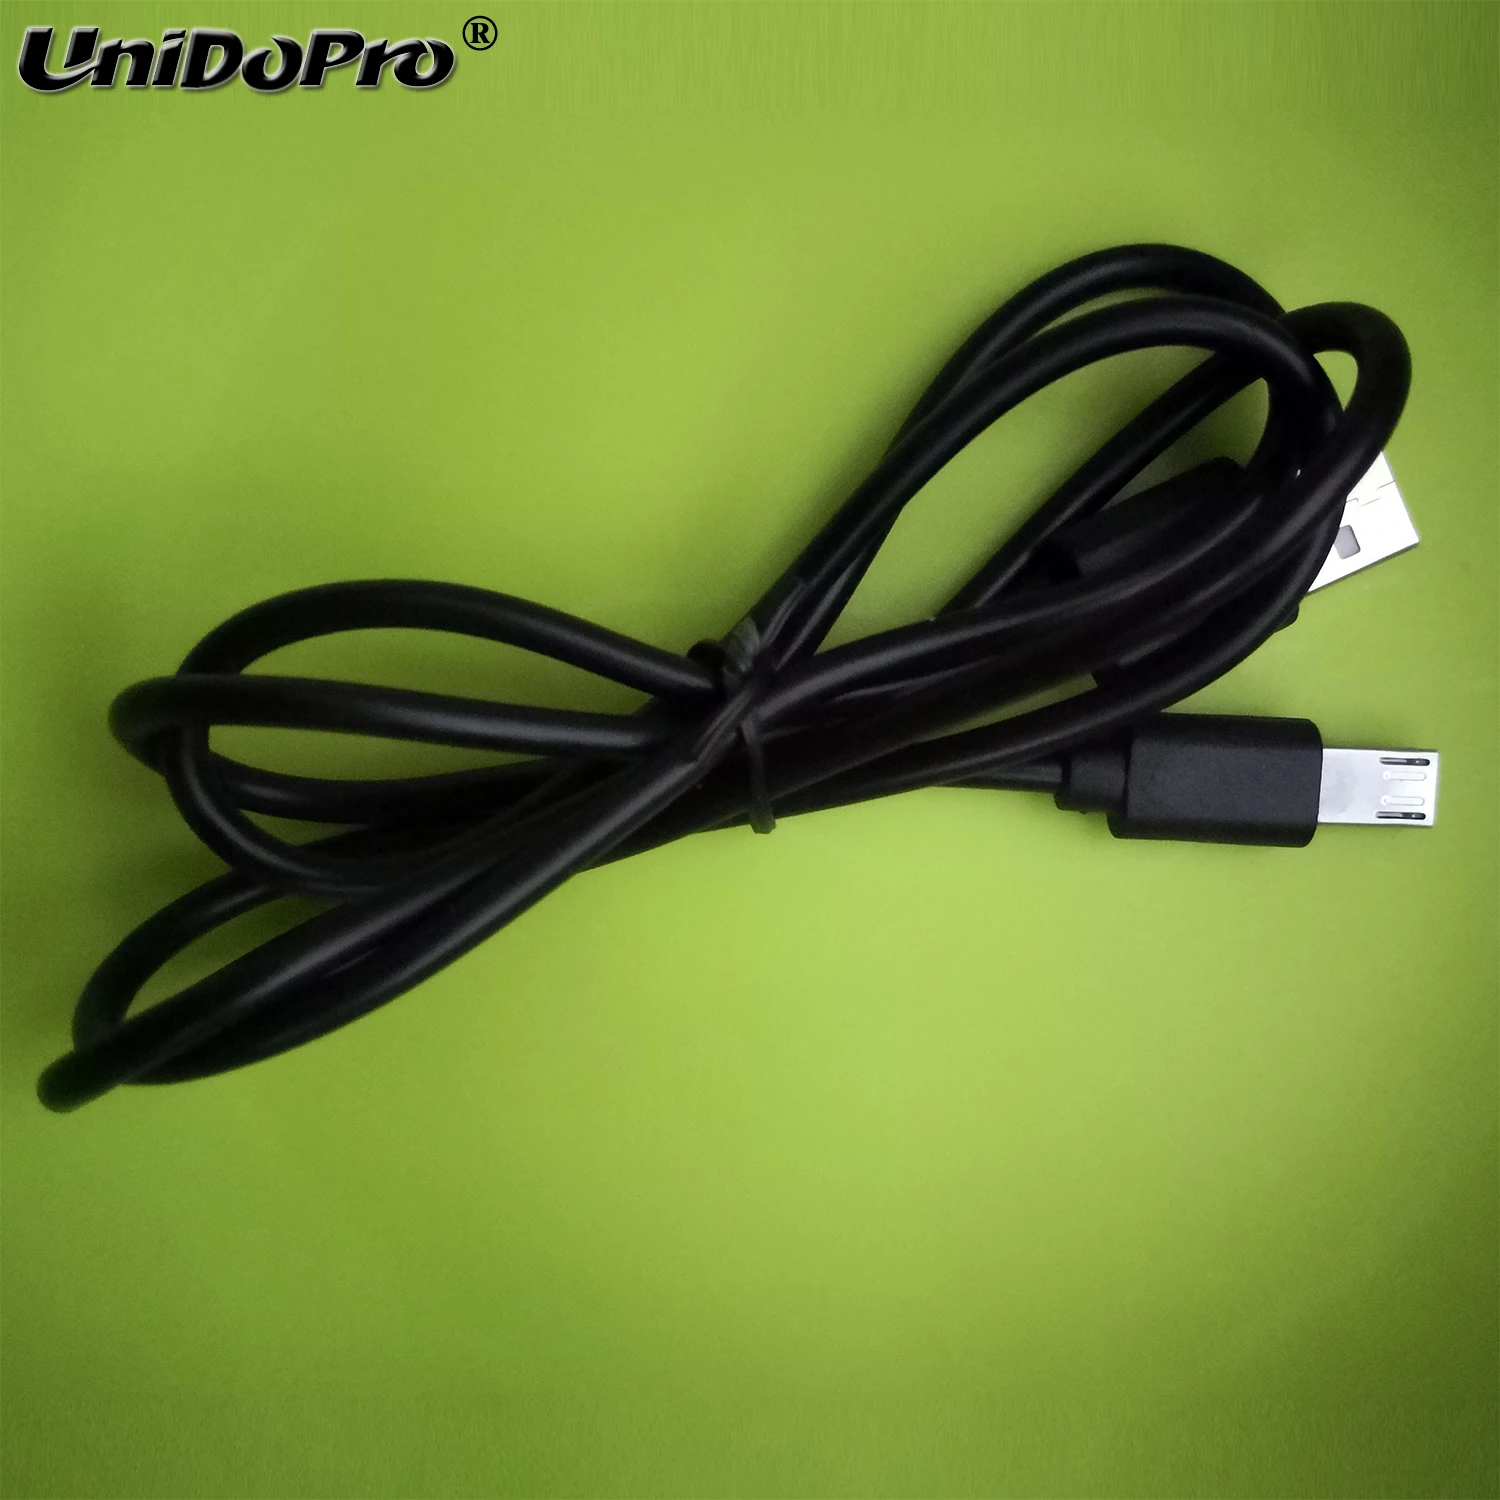 12 мм Micro Usb кабель длинный штекер зарядный шнур провод для Oukitel K10000 Pro C12 C13 UMIDiGi A5 A3 Blackview A60 A7 Bv5500 Zoji Z8